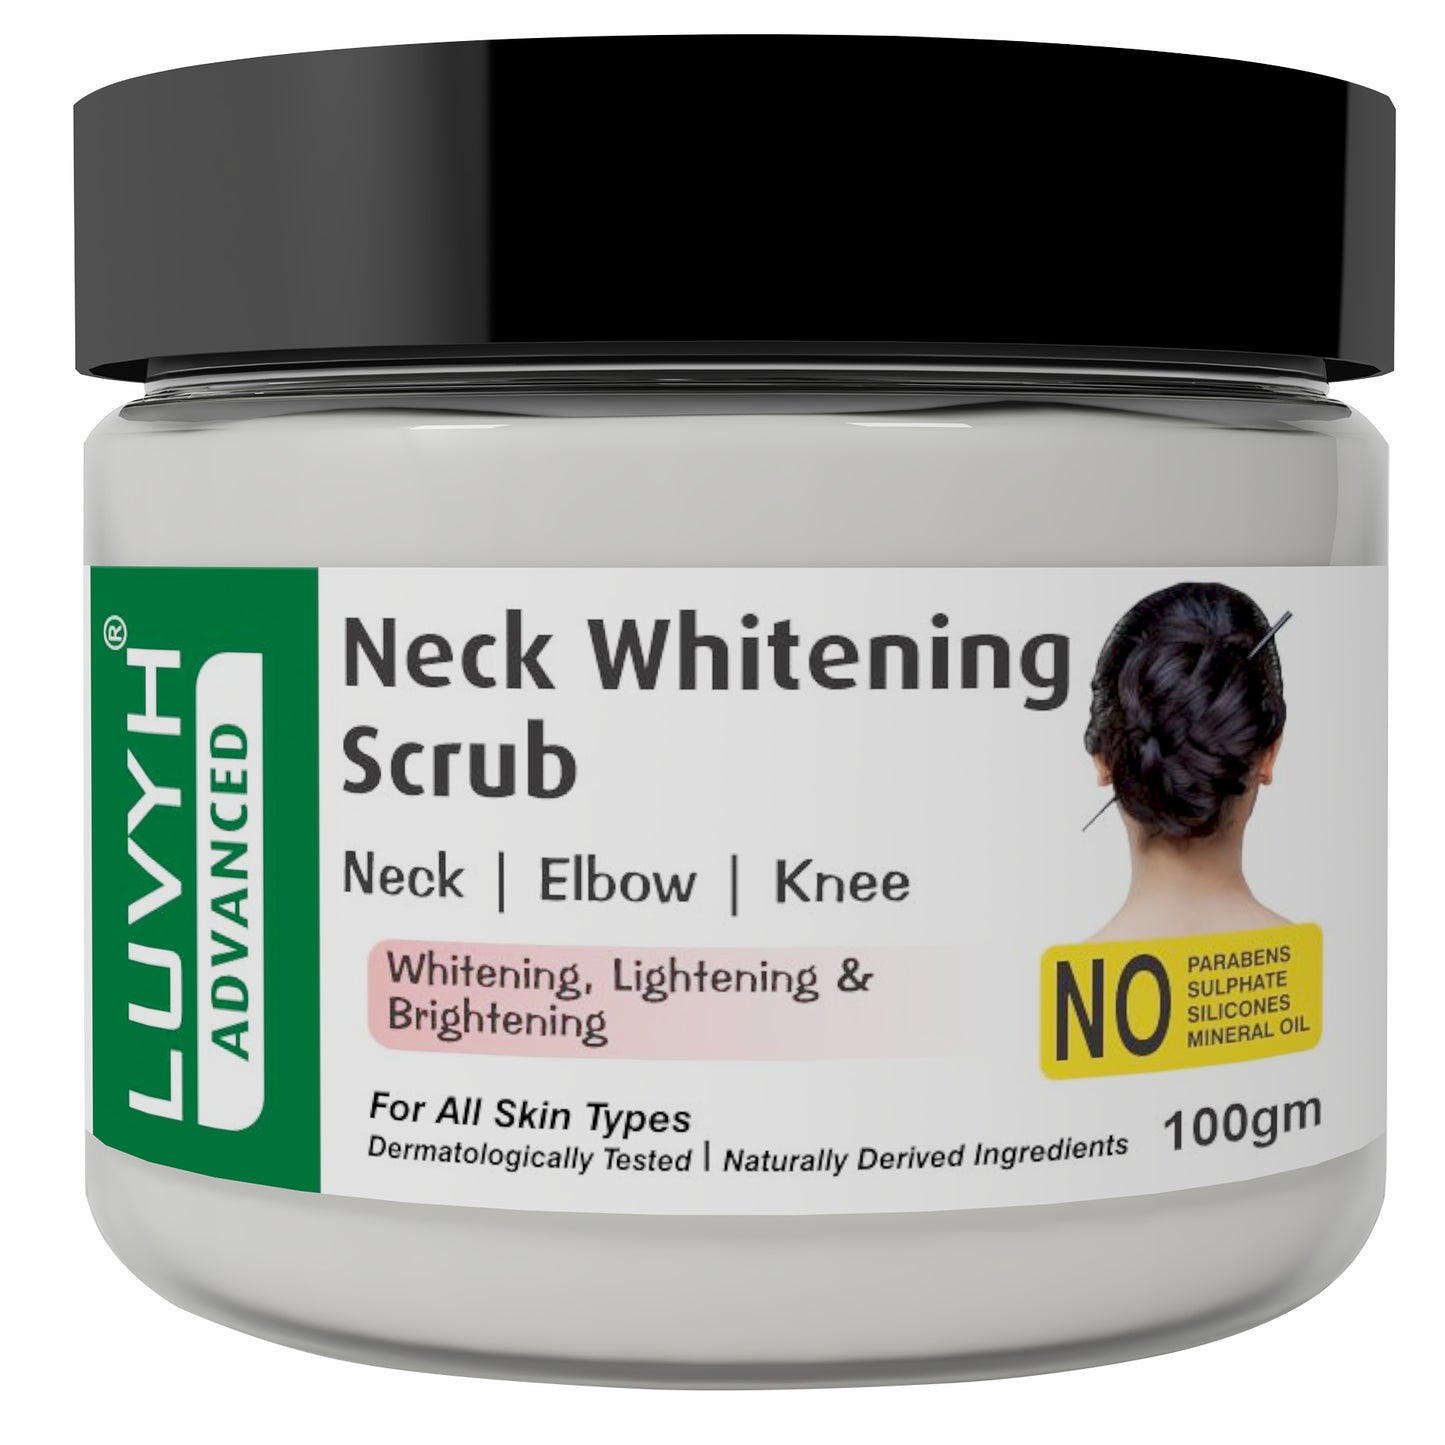 Neck Whitening Scrub -  Best for Neck, elbow, knee Area